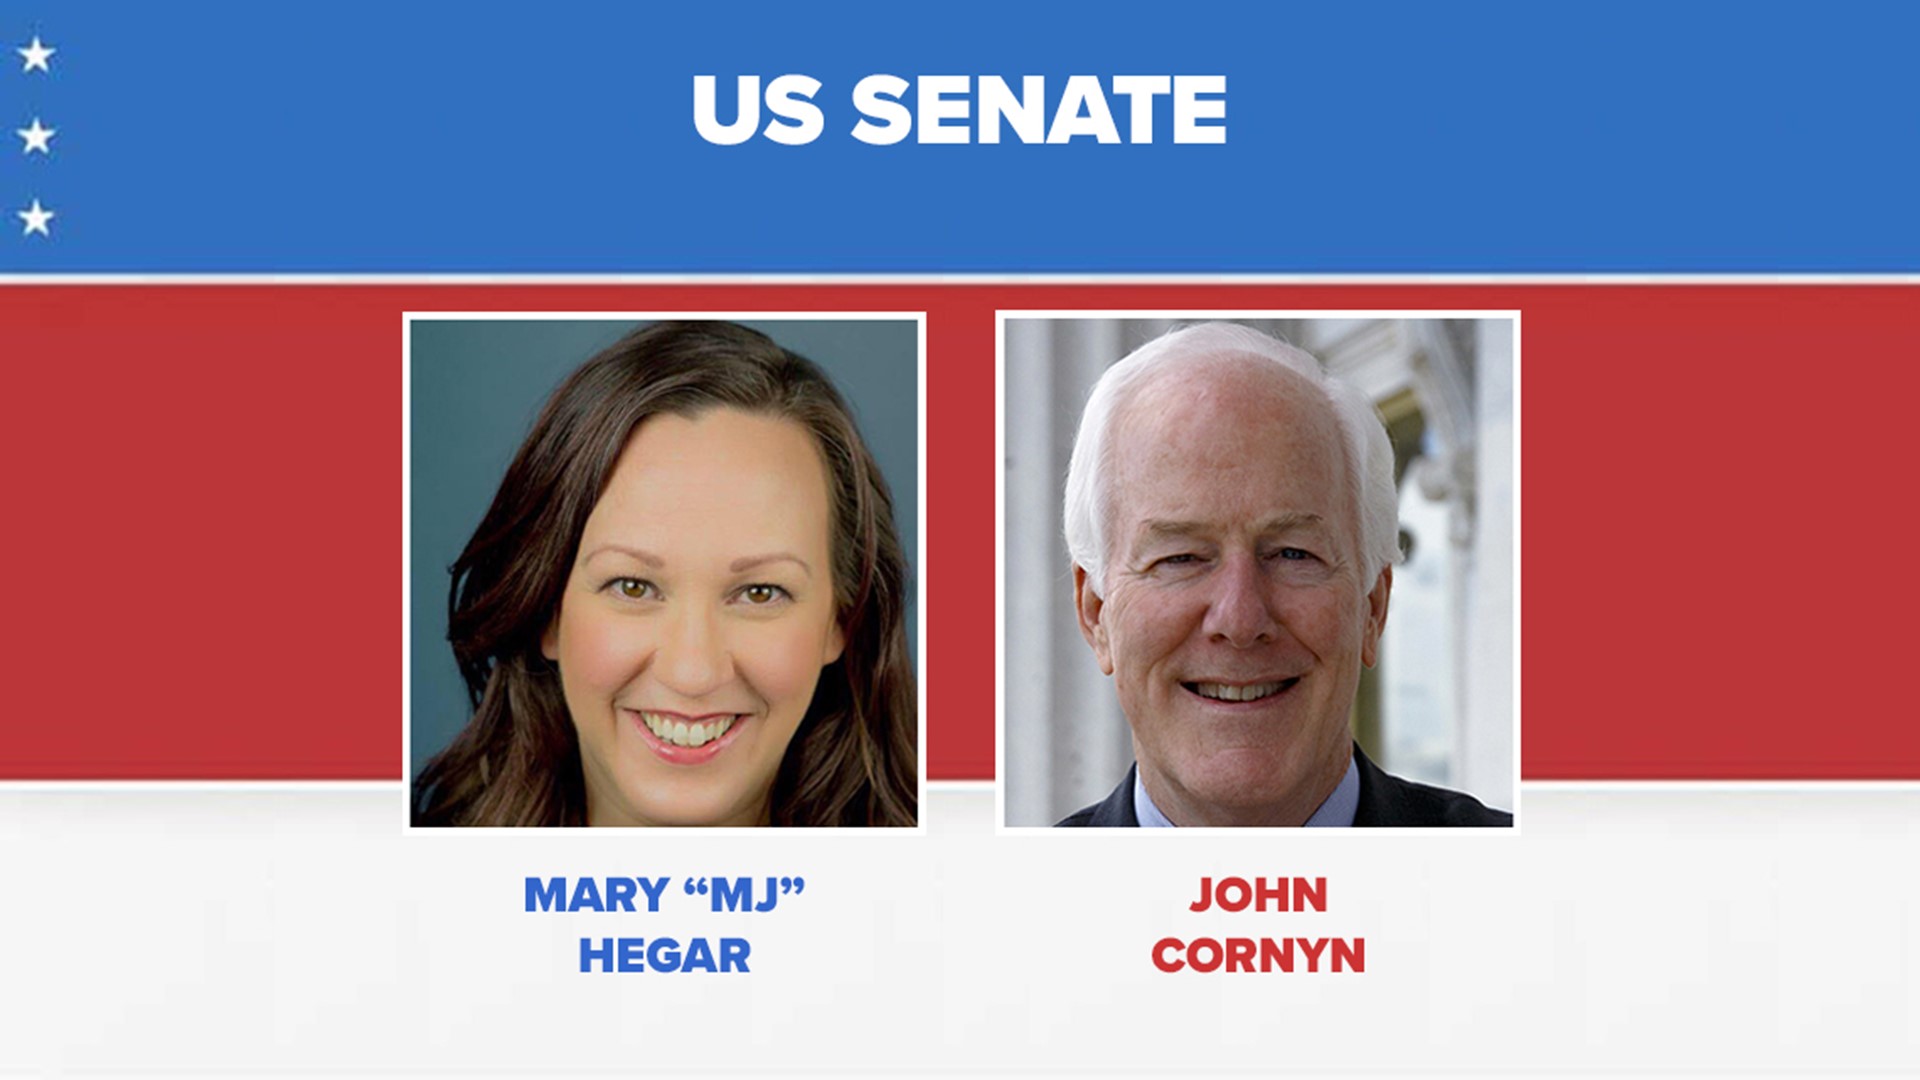 Democratic MJ Hegar is a U. S. Air Force veteran and Republican John Cornyn is seeking a fourth term in the Senate.